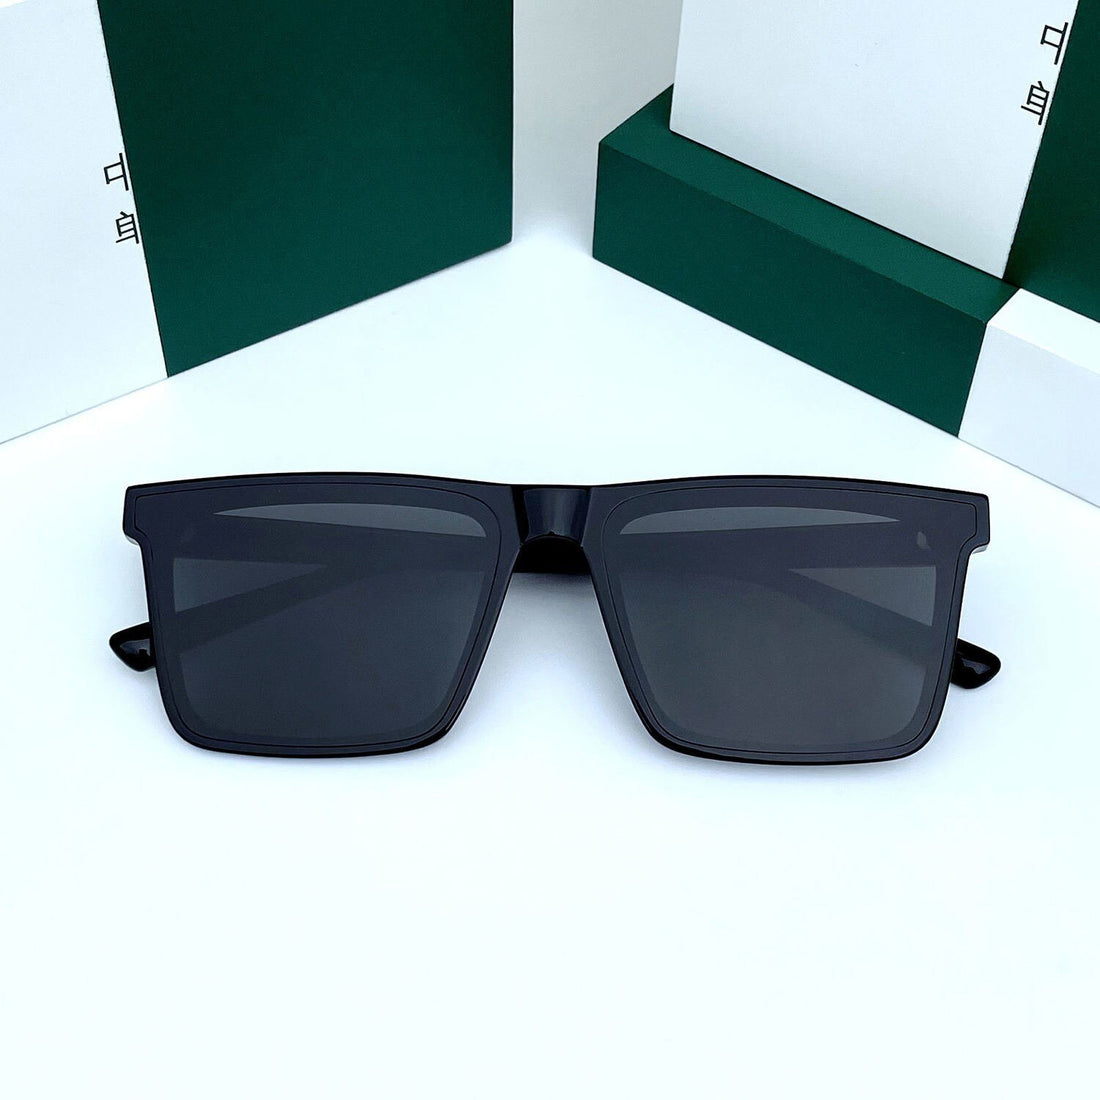 Arzonai New Trending Black Wayfarer Sunglasses for Men and Women